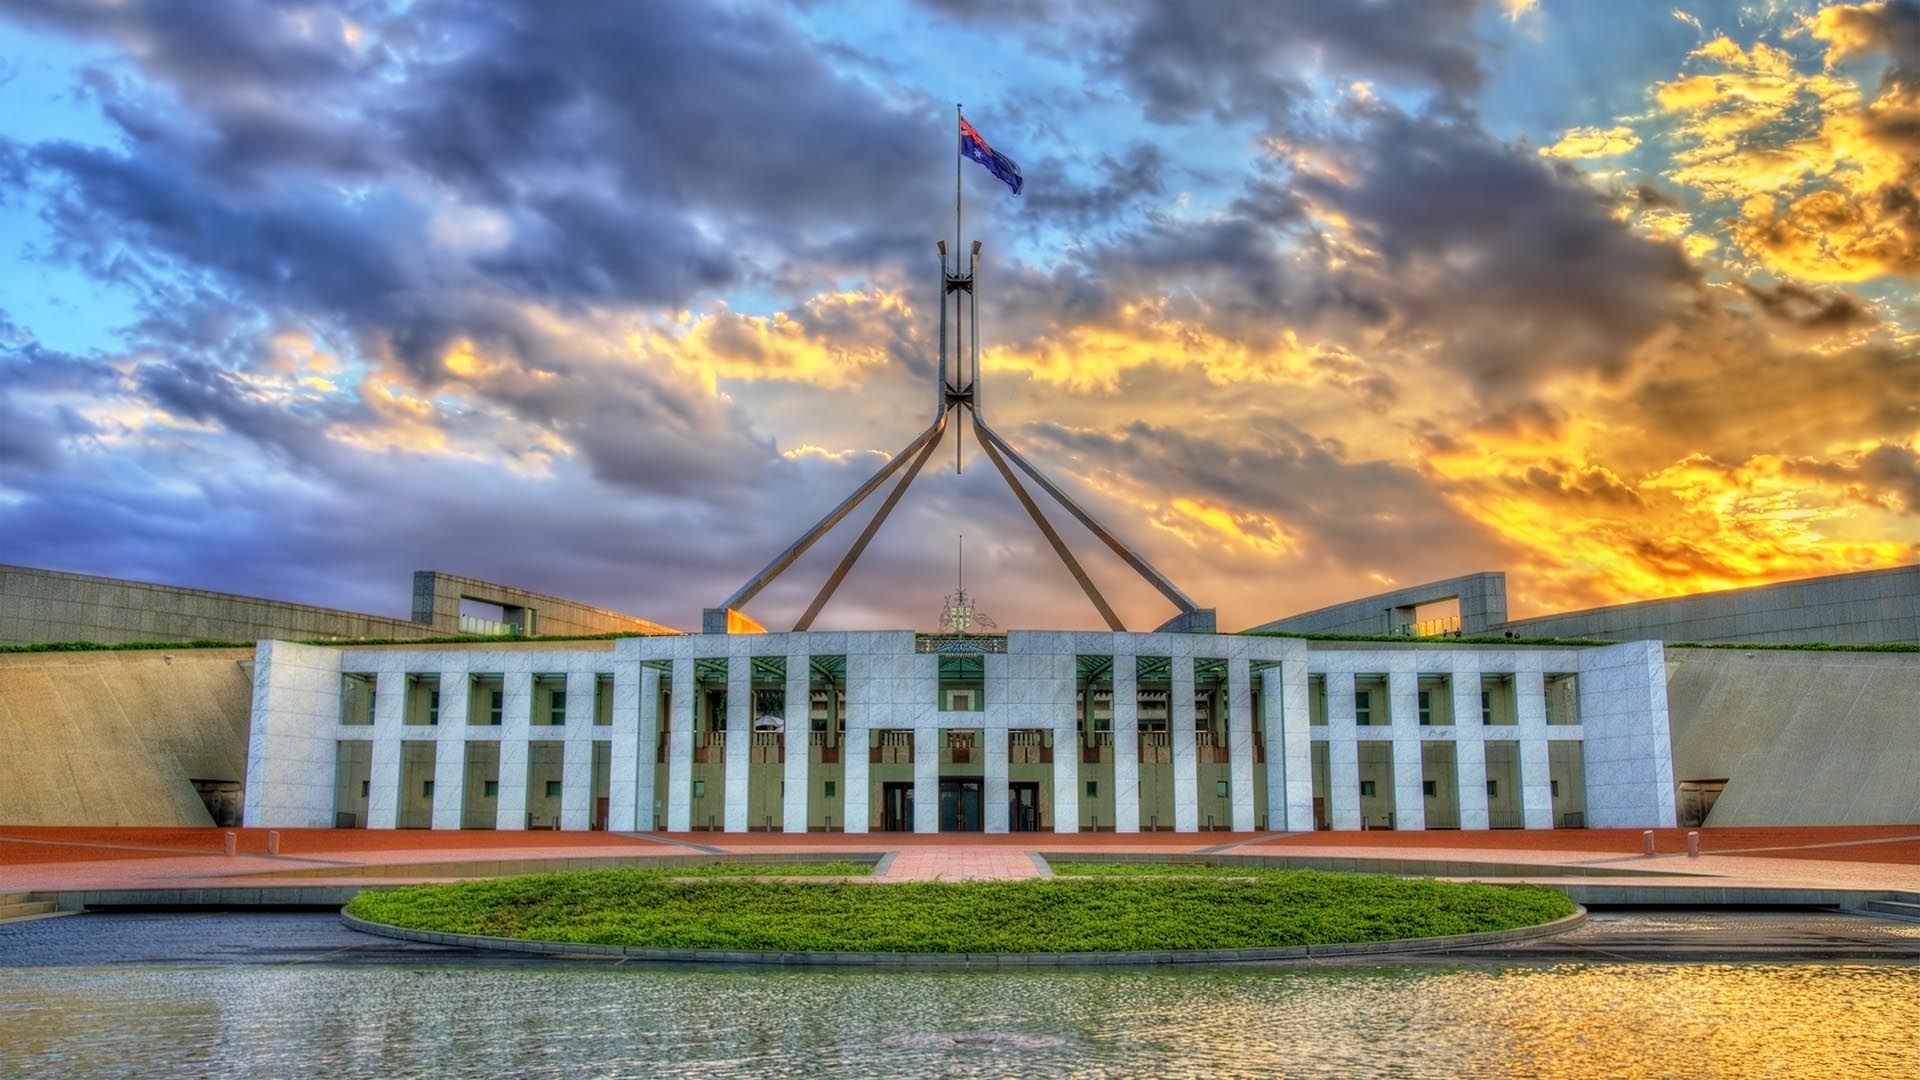 Australian Parliament House. Generic image for Australian politics stories